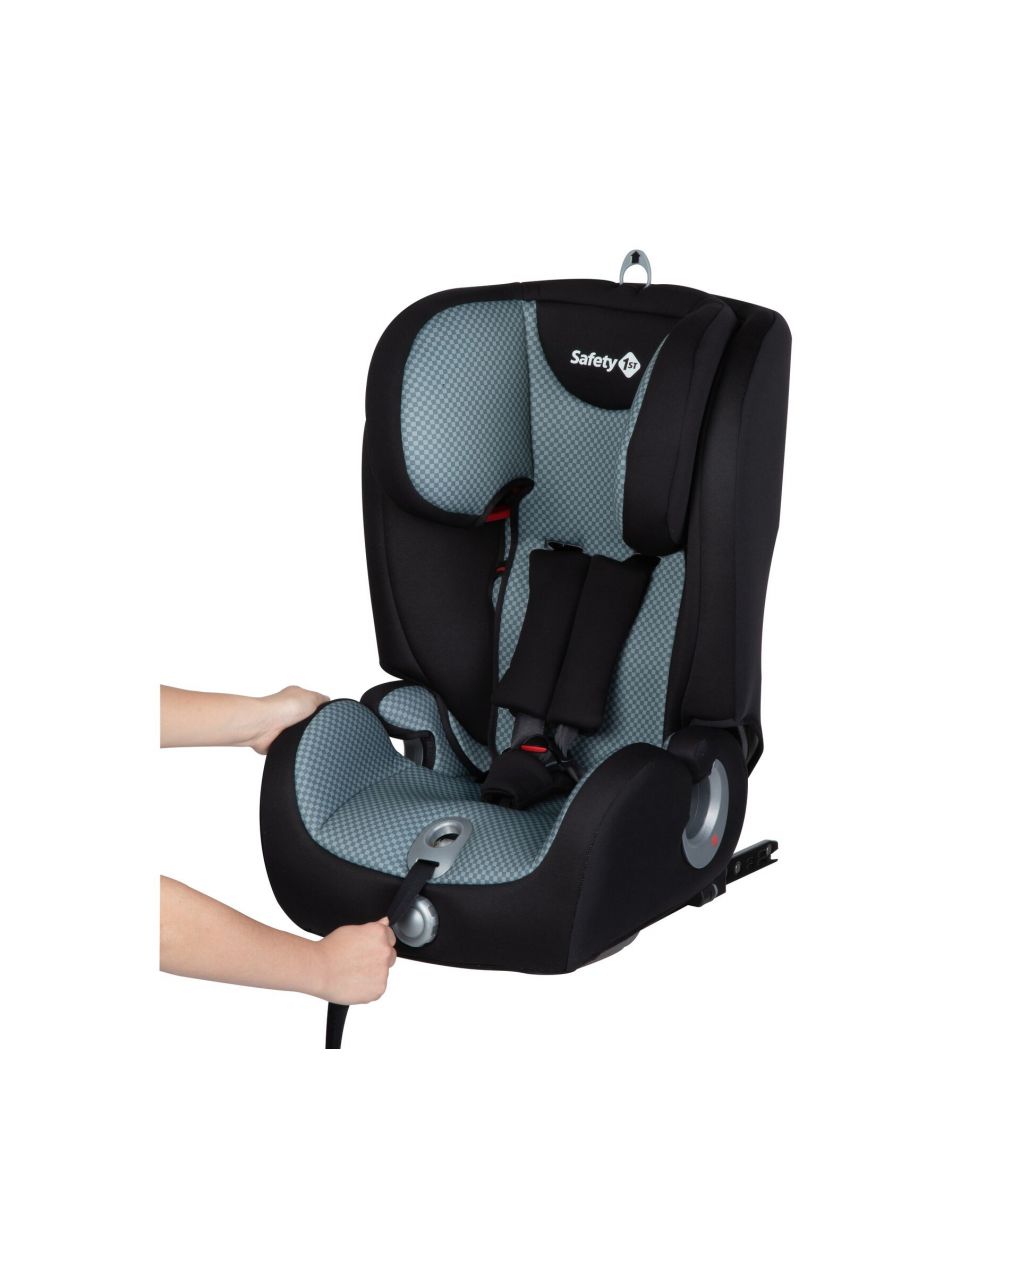 Safety 1st κάθισμα αυτοκινήτου everfix ομάδα 1/2/3 9-36 kg pixel grey - Safety 1st